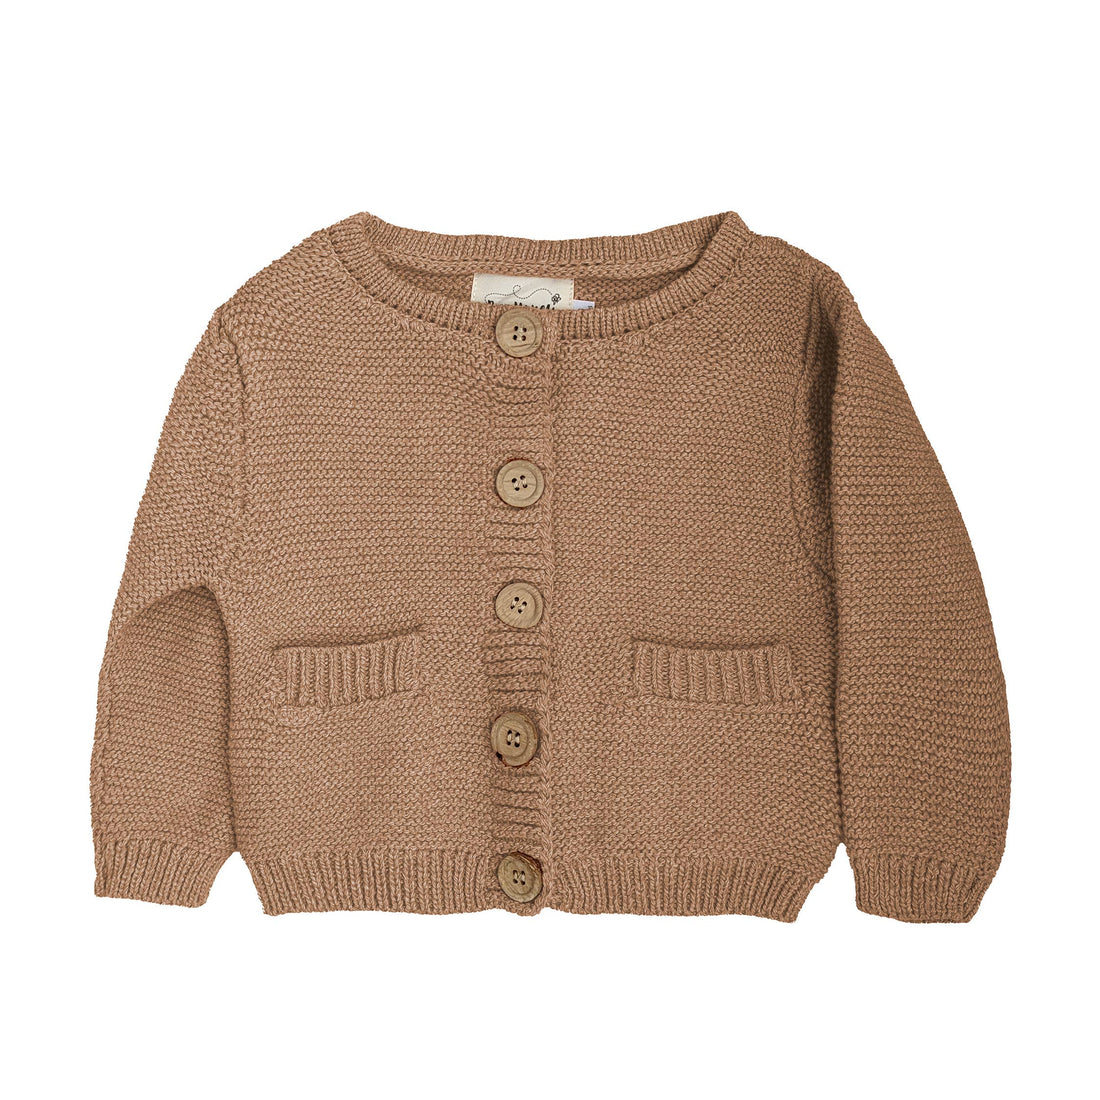 Knit Button Cardigan in Honey Crisp-Sweaters-Bee Honey Babies-6-12 M-bluebird baby & kids